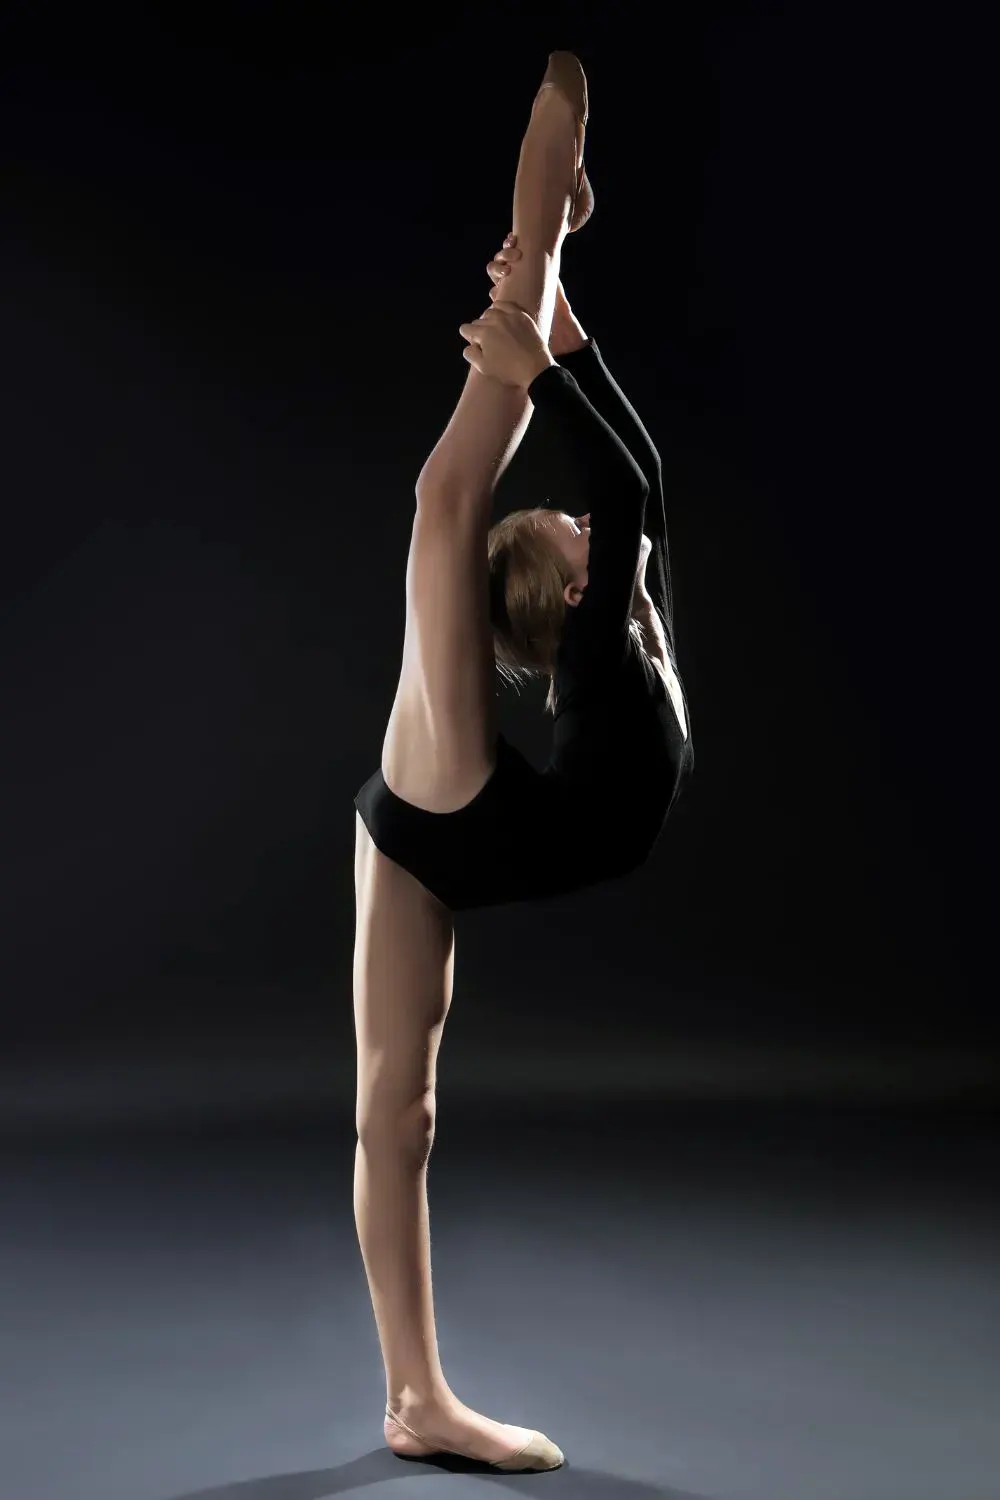 Girl performing gymnastics wearing a leotard